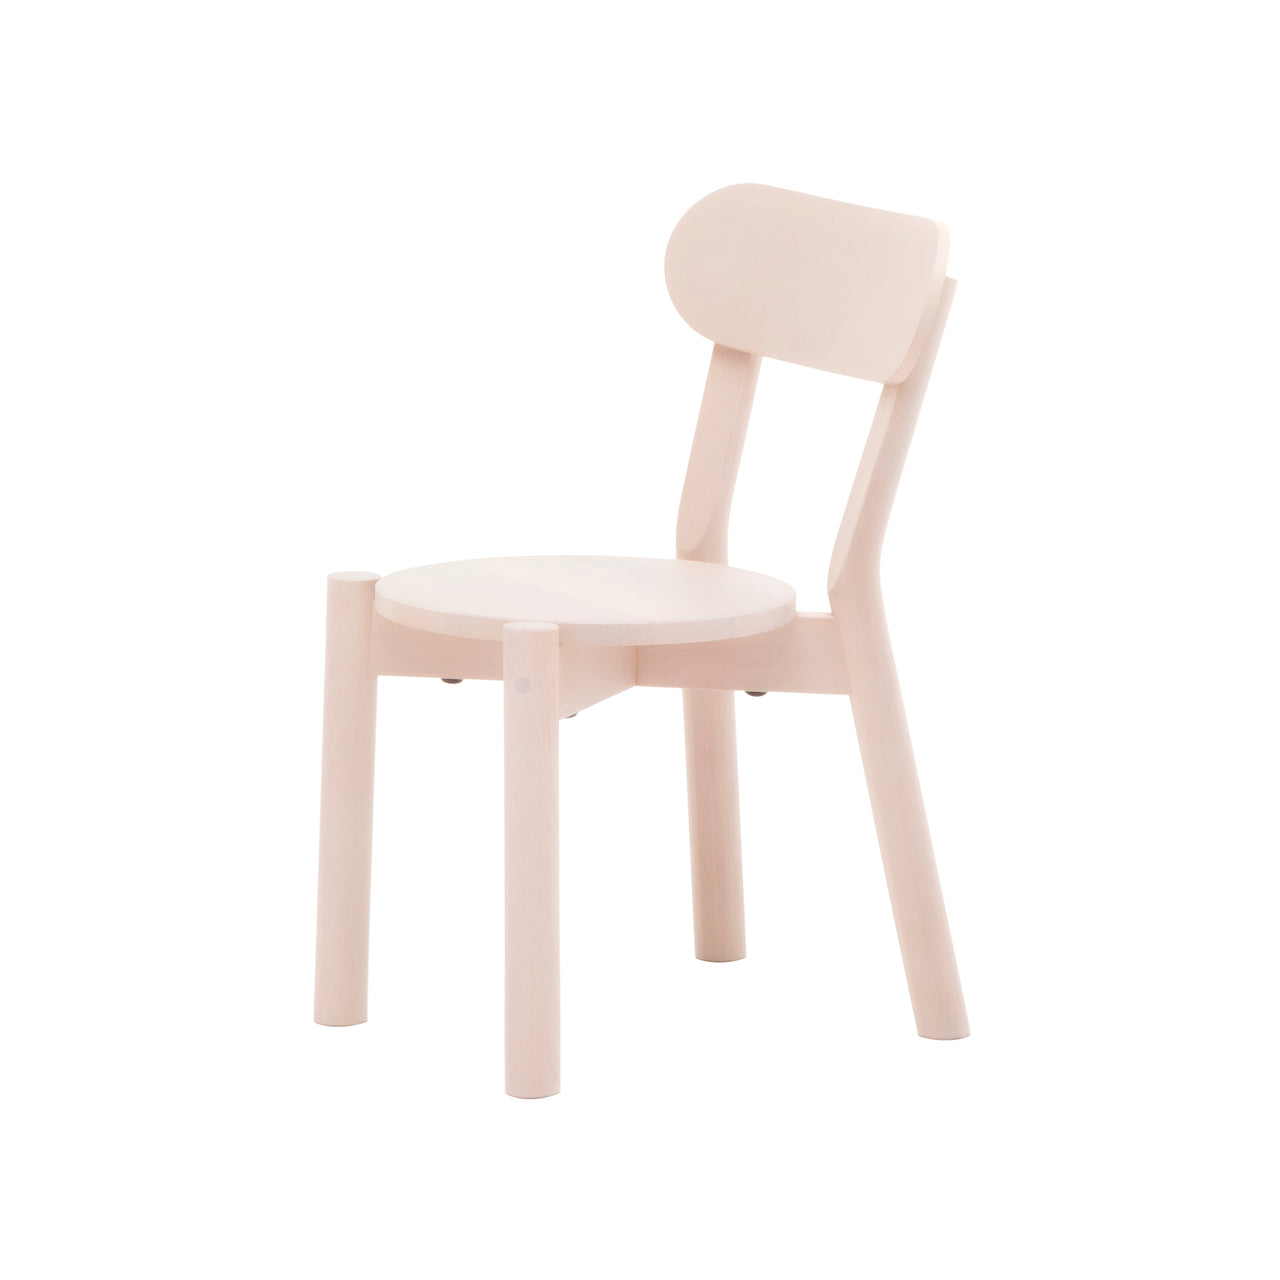 Castor Kids Chair: Pink White